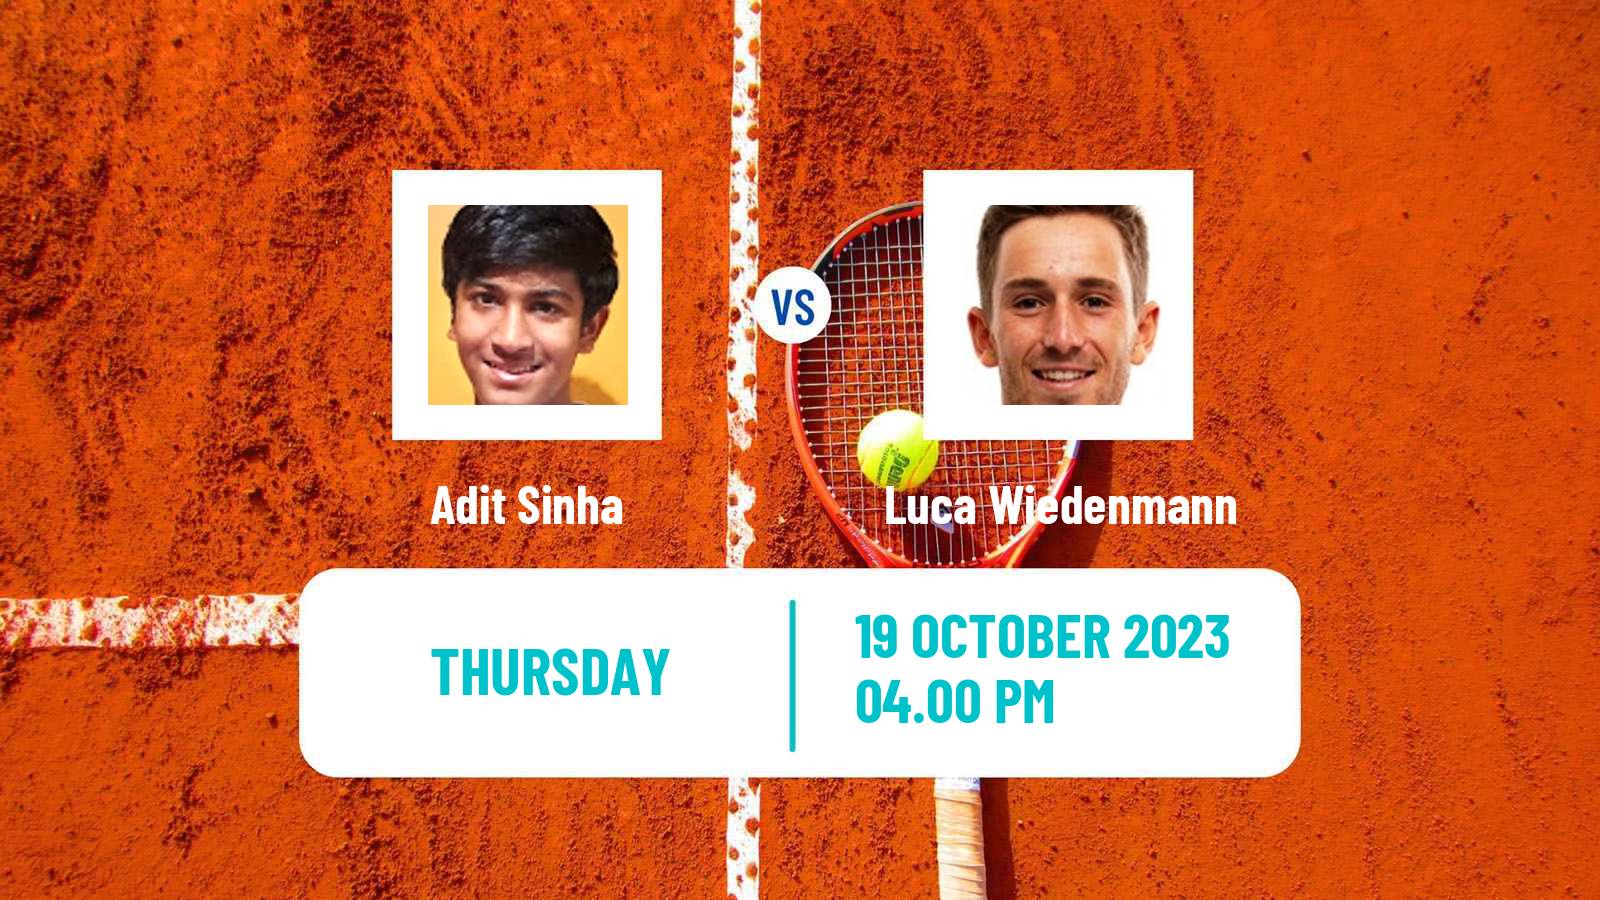 Tennis ITF M15 Las Vegas Nv Men Adit Sinha - Luca Wiedenmann